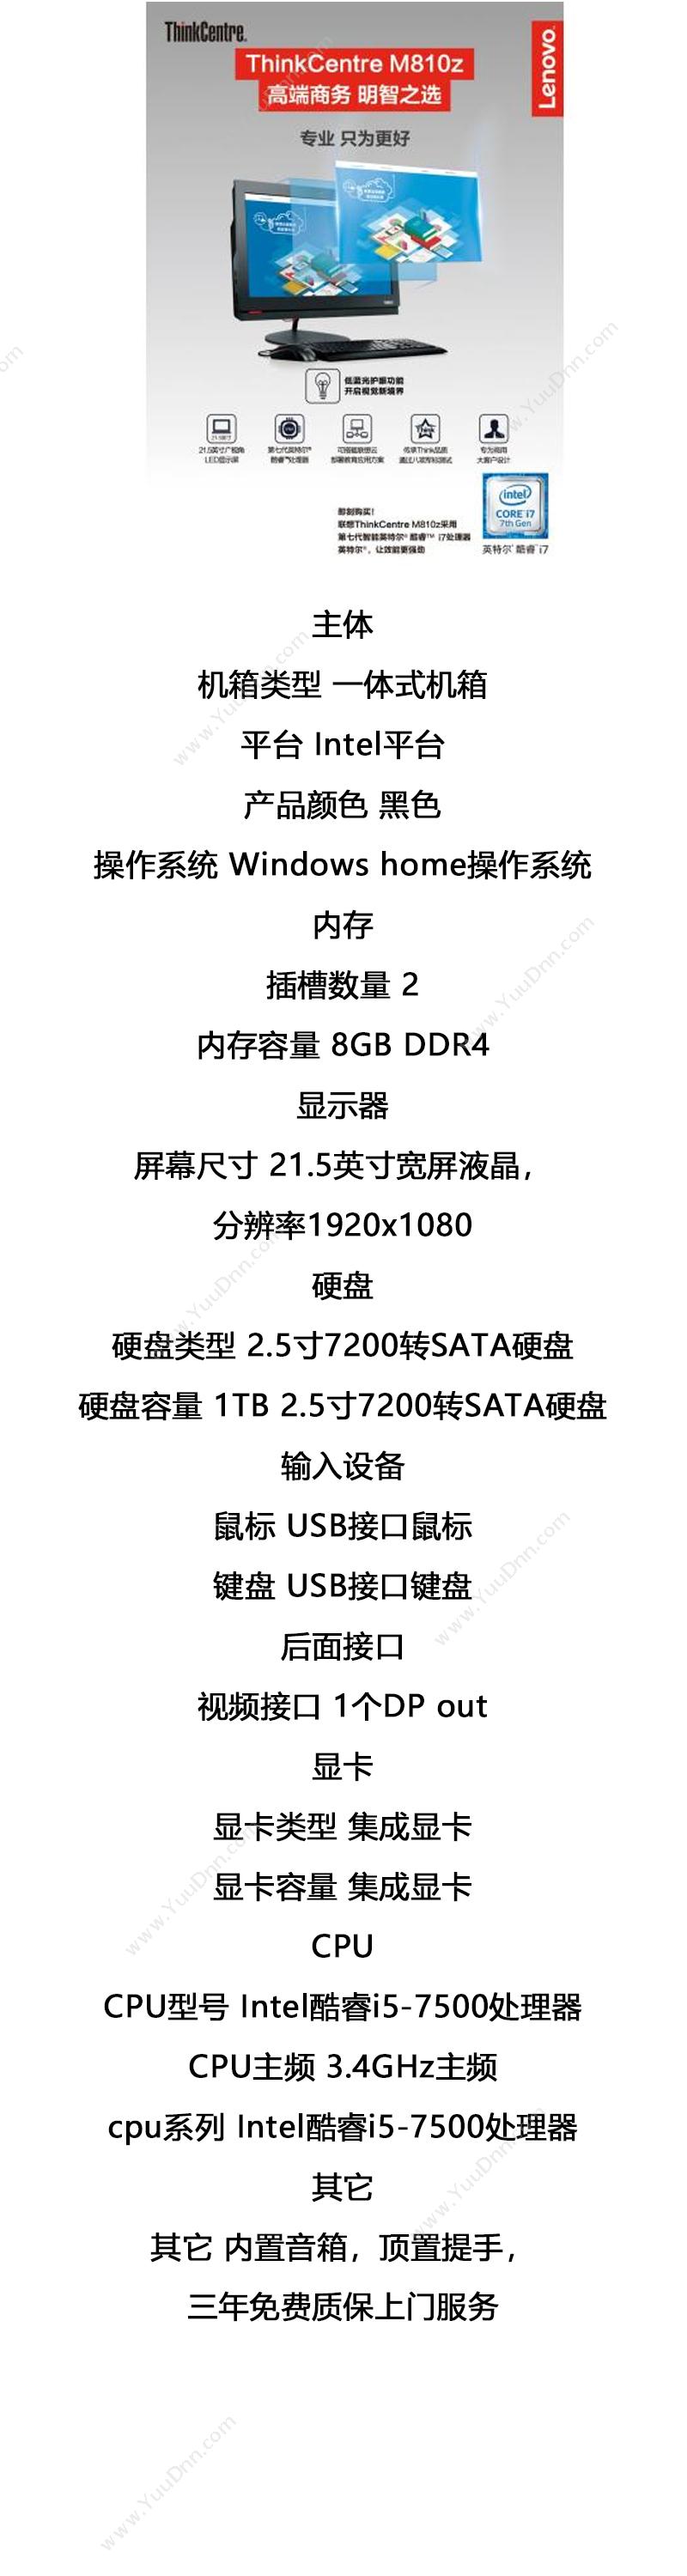 联想 Lenovo ThinkCentre M810z-D181 一体机 21.5